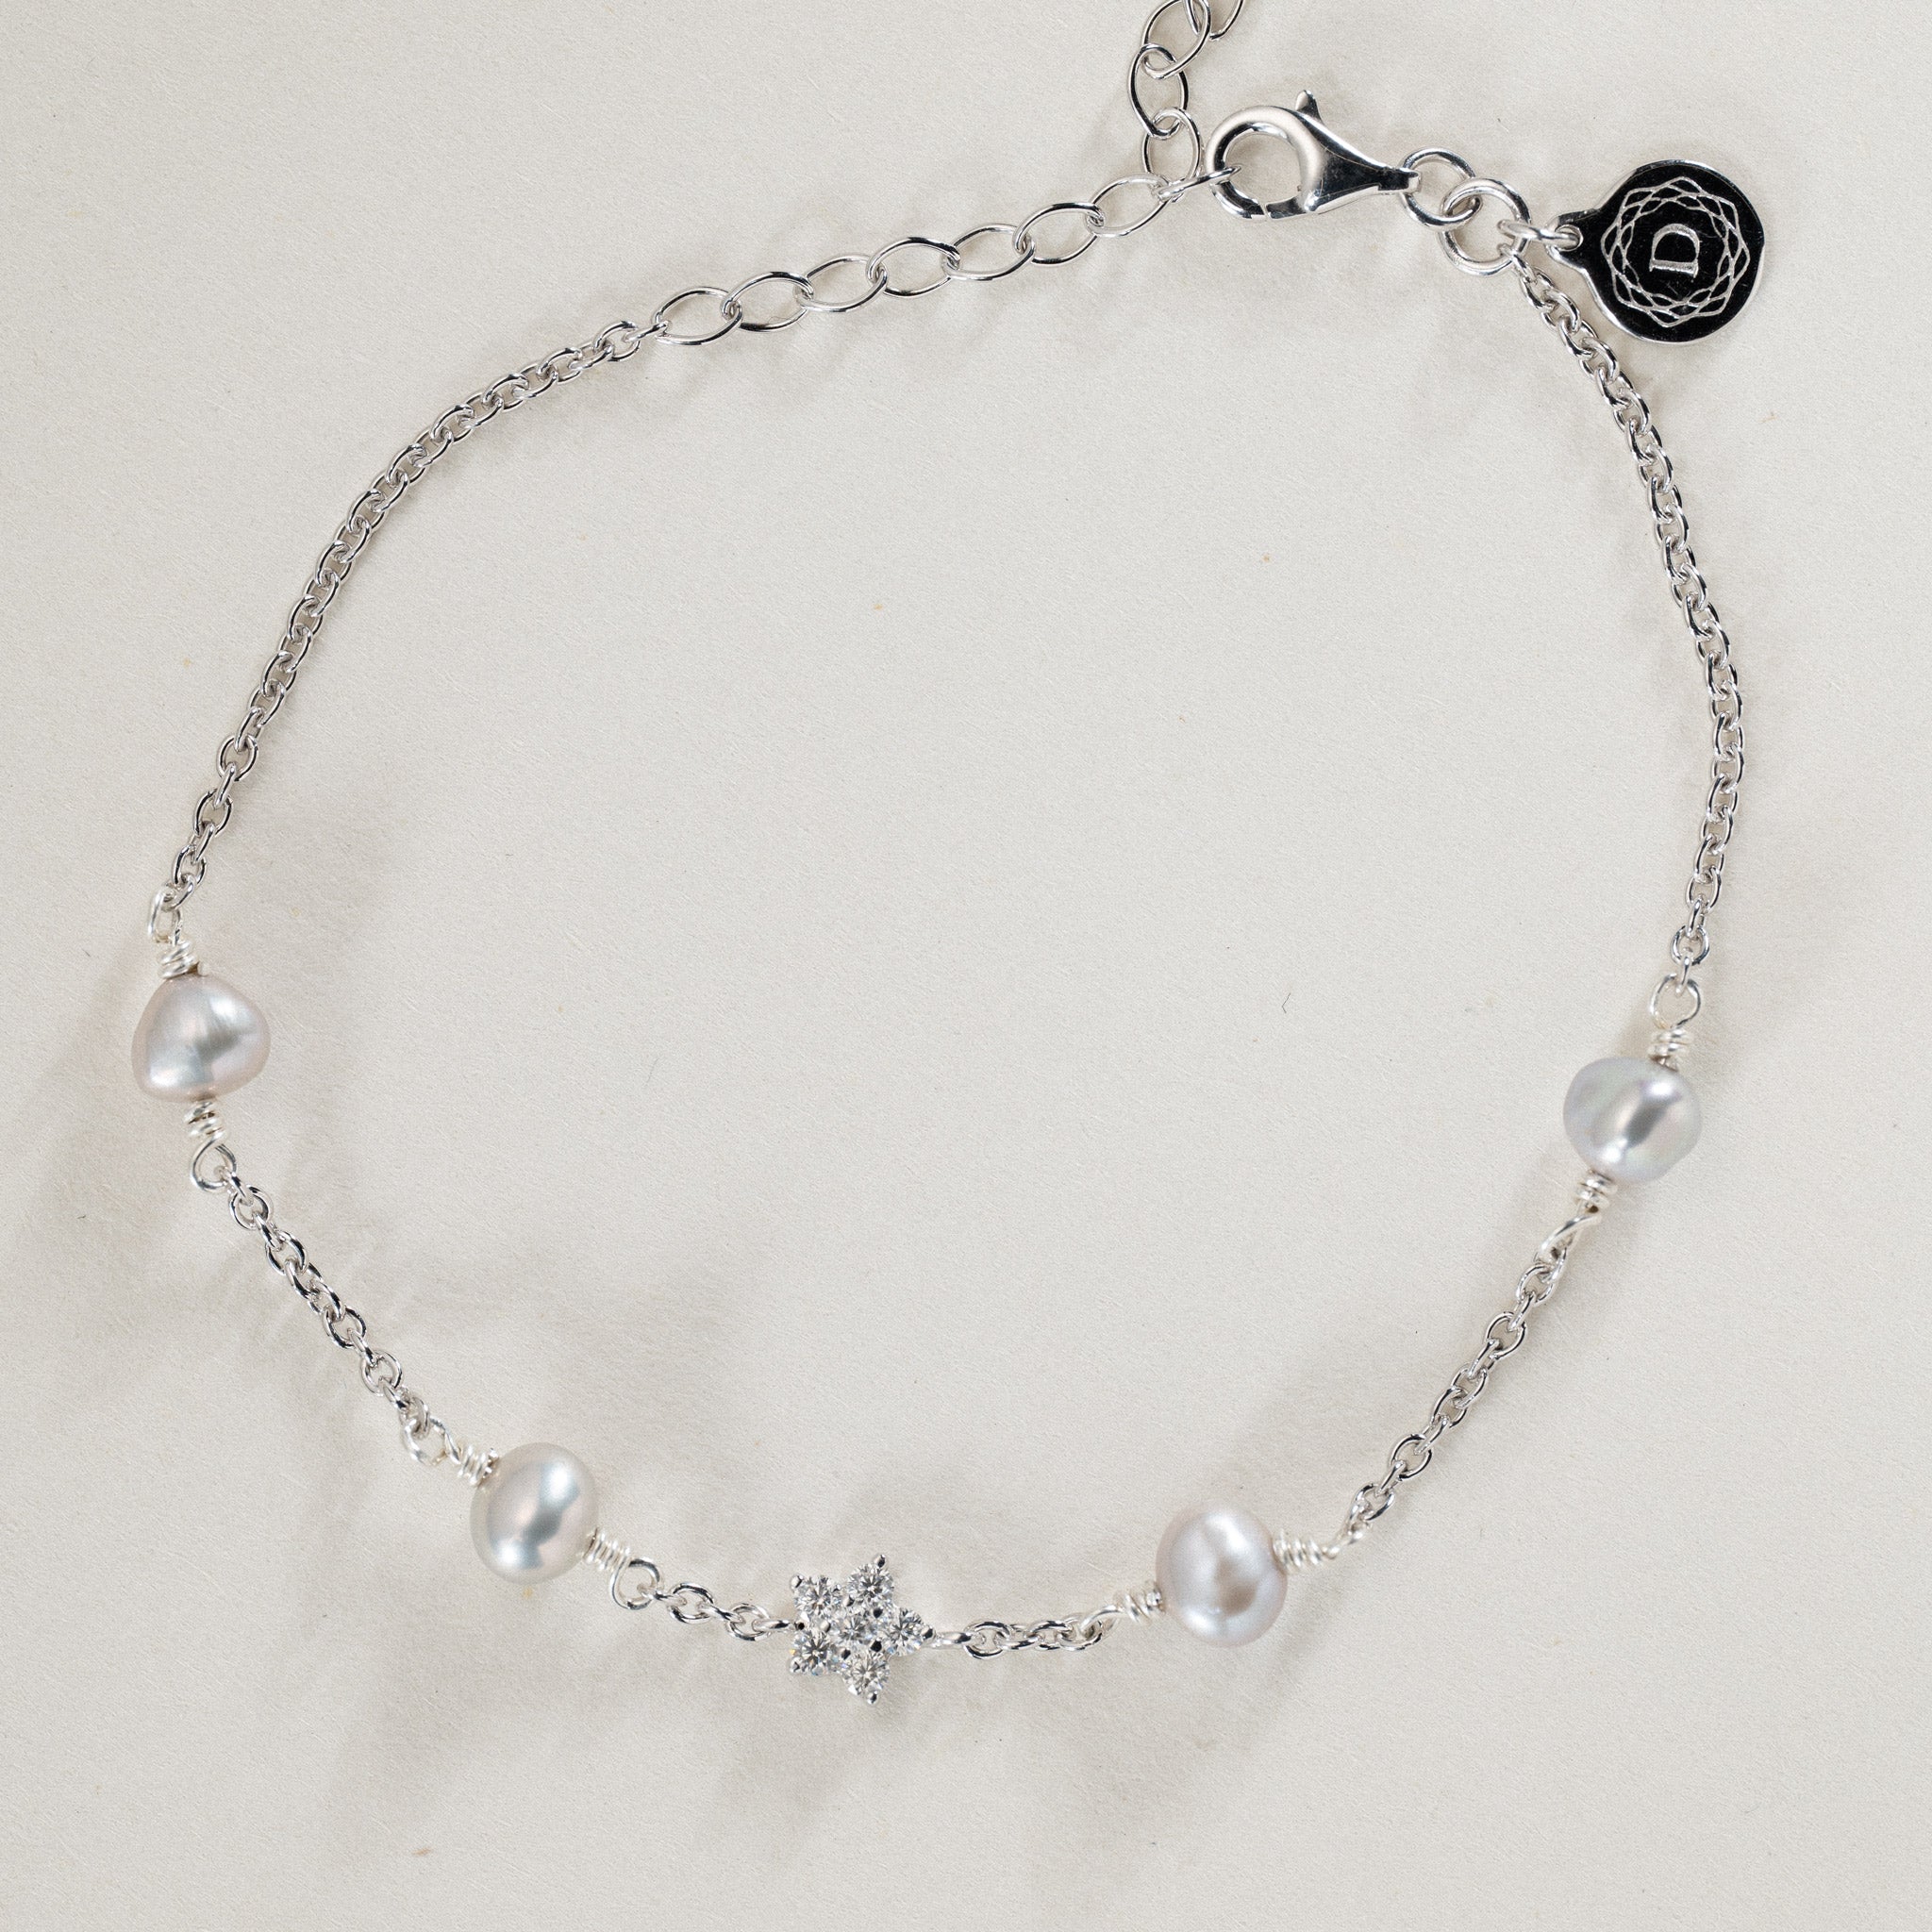 No. 04 - 0.12ct Grown Diamond Star bracelet in silver w. semi-precious stone